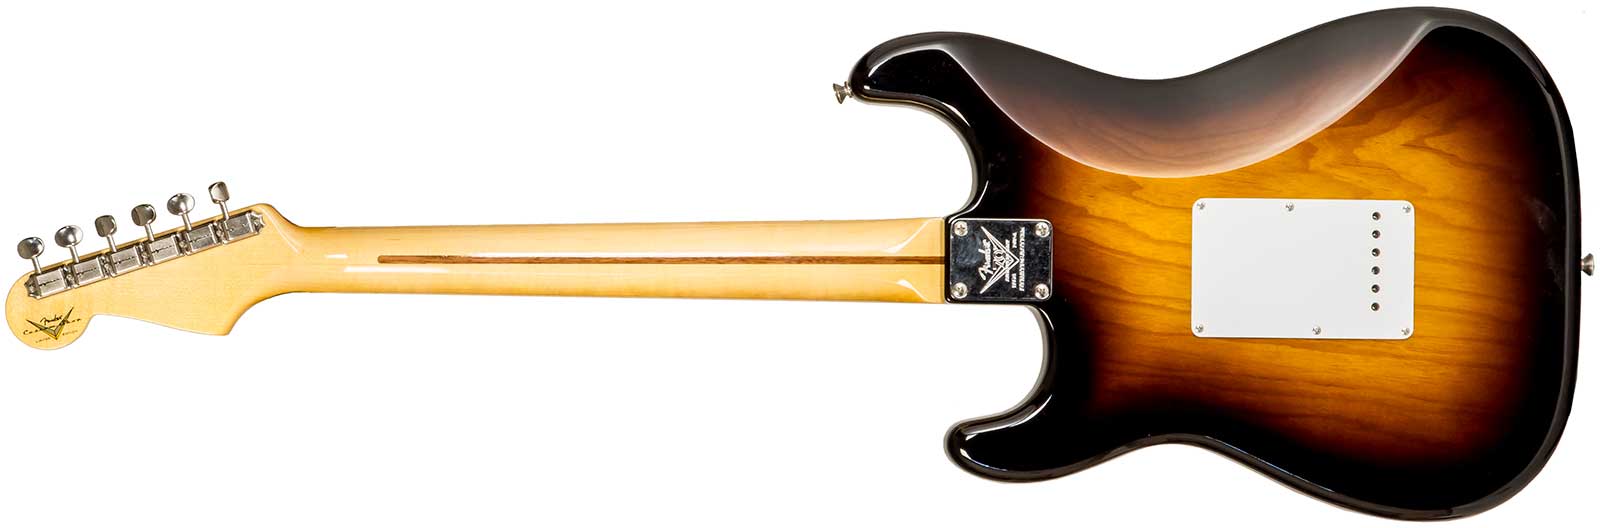 Fender Custom Shop Strat 1954 70th Anniv. #xn4597 3s Trem Mn - Time Capsule 2-color Sunburst - Guitarra eléctrica con forma de str. - Variation 1